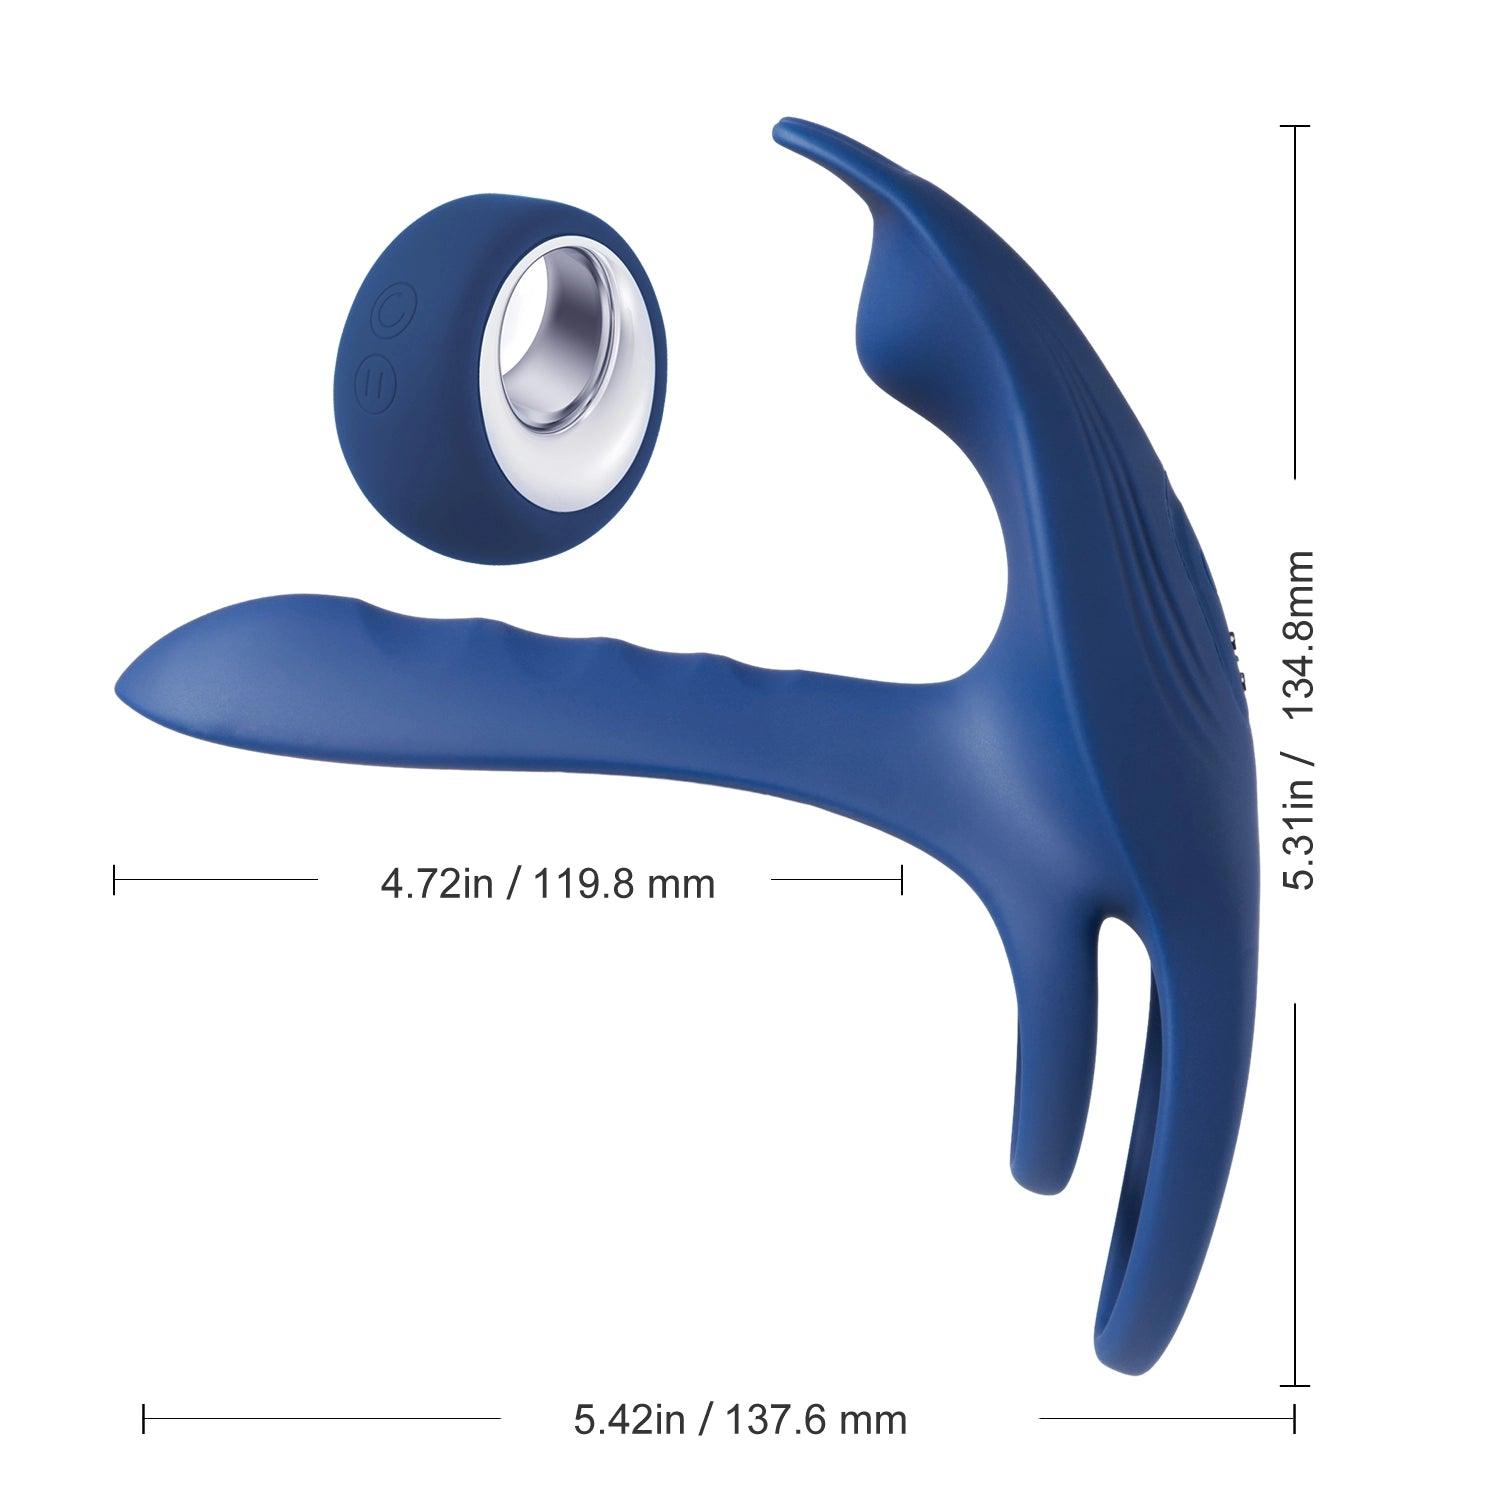 BLUE FOX Remote Control Vibrating Girth Enhancer Penis Sleeve & Clit Stimulator - Honey Play Box Official